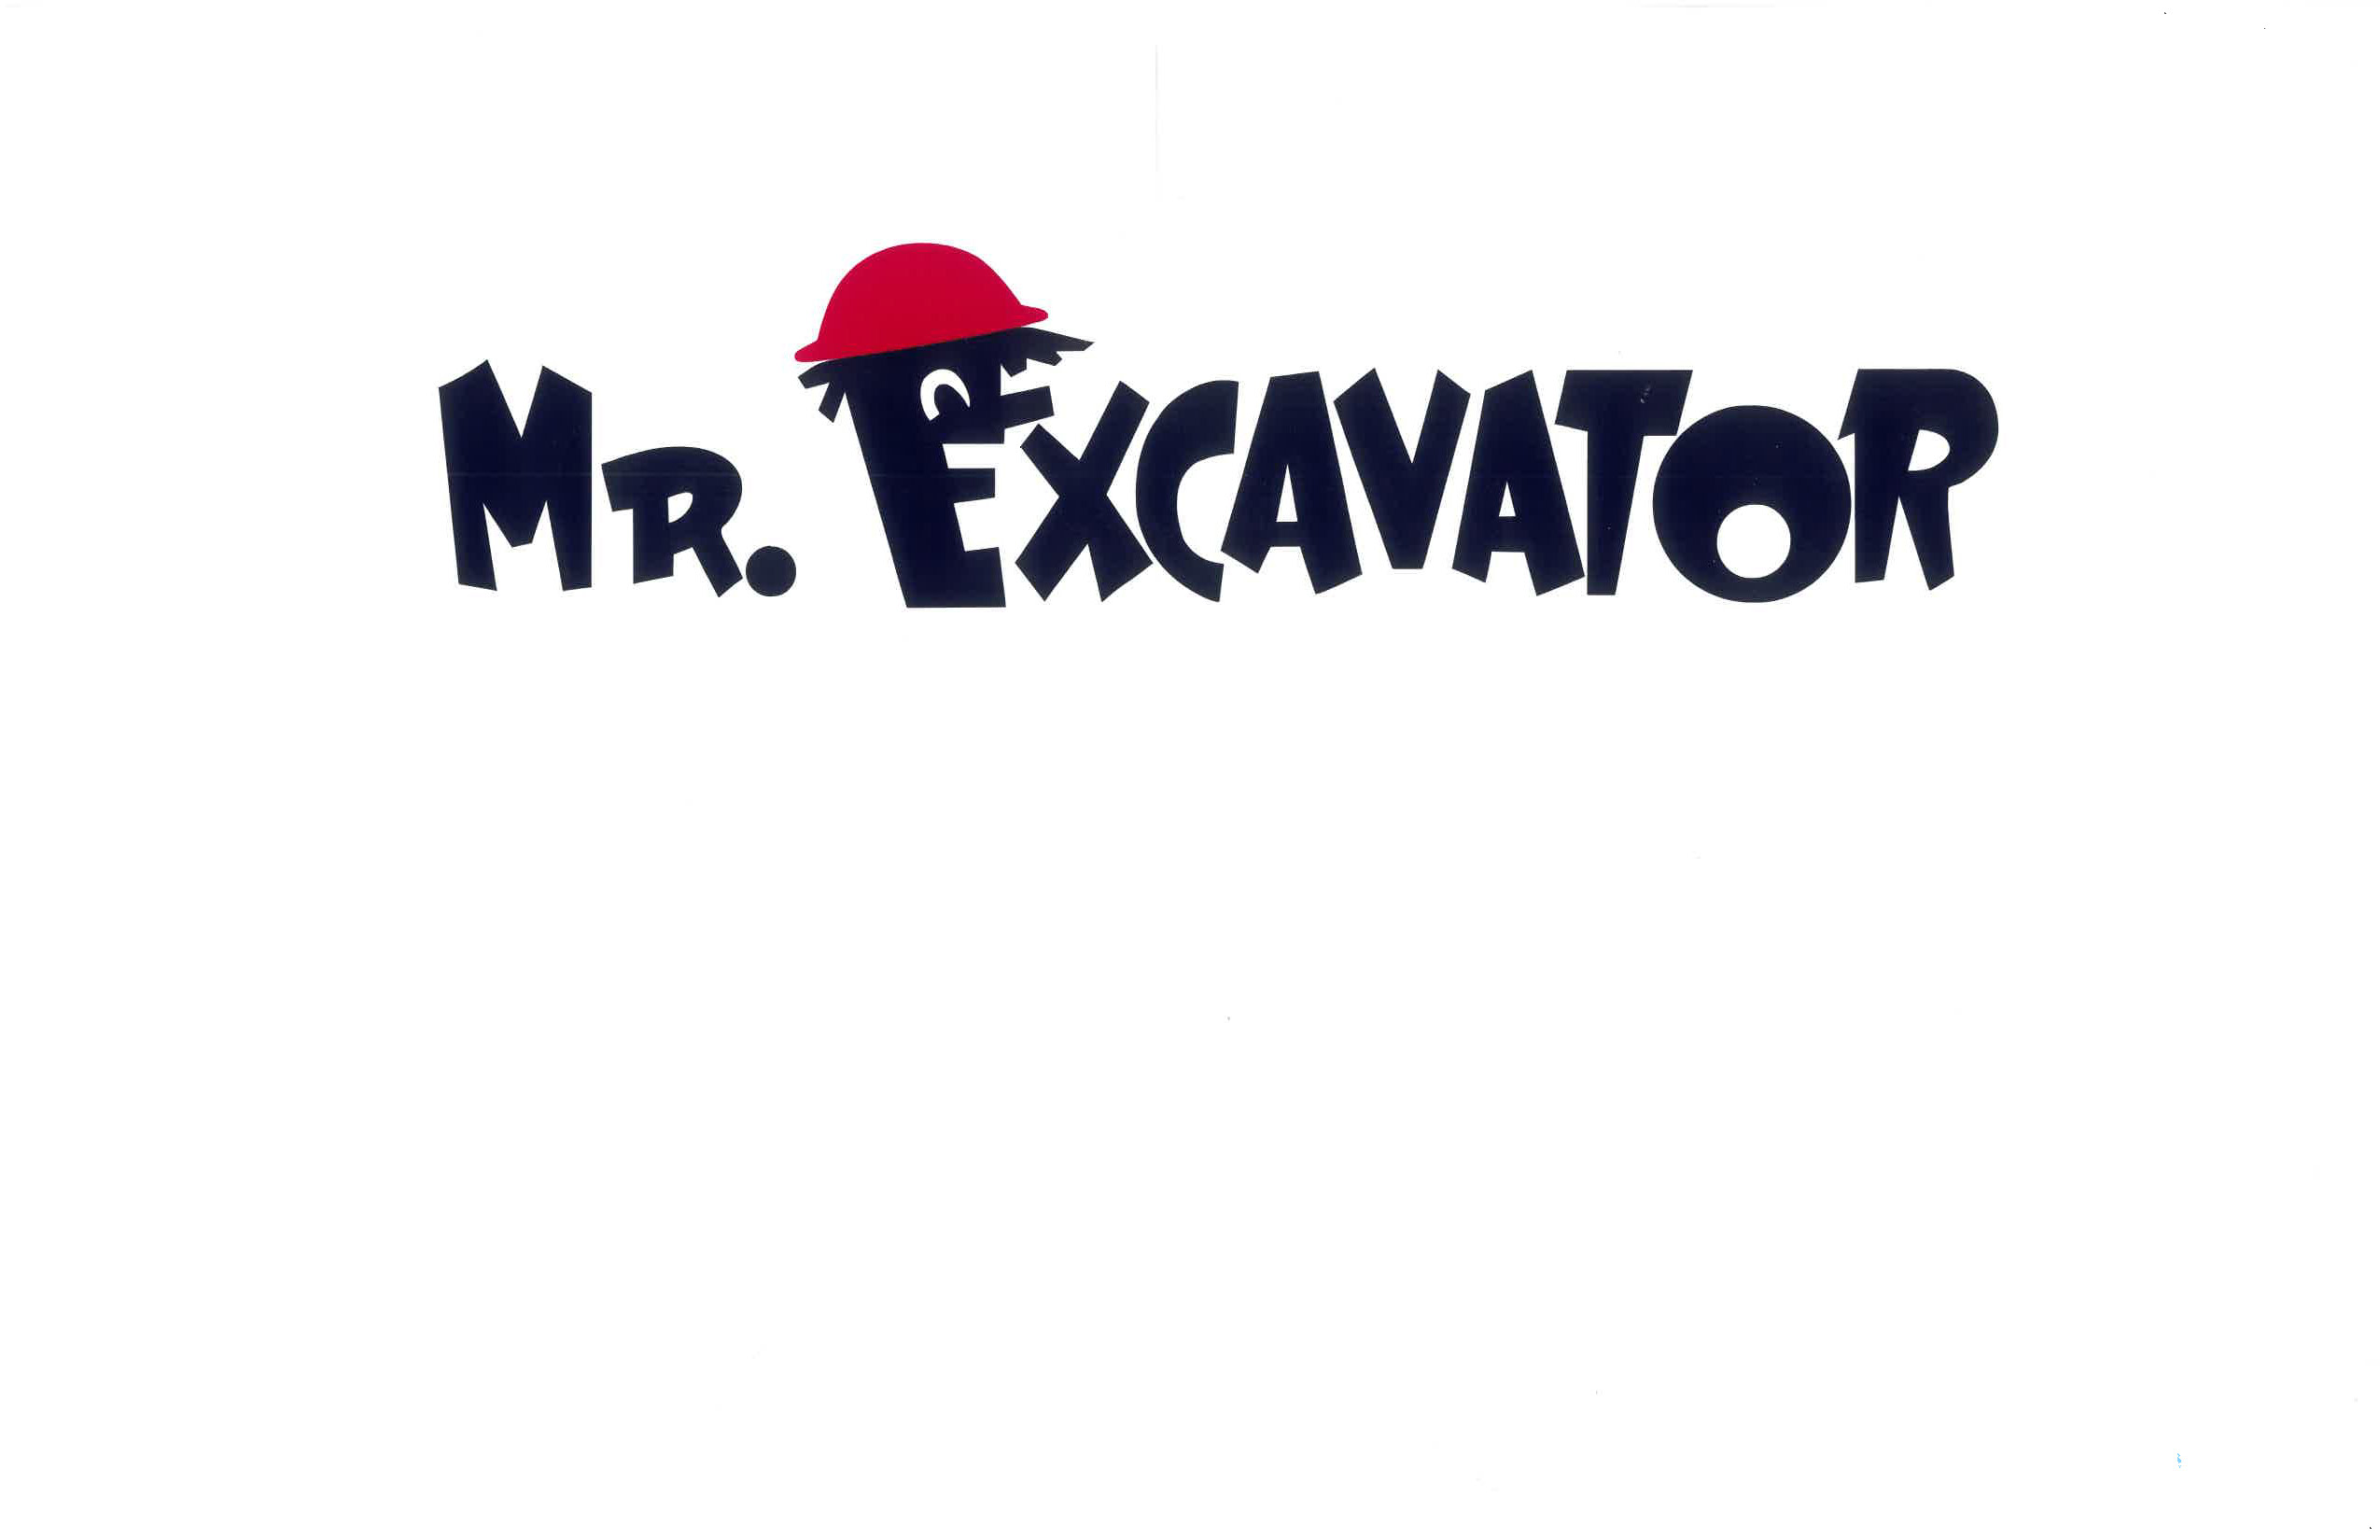 Mr. Excavator